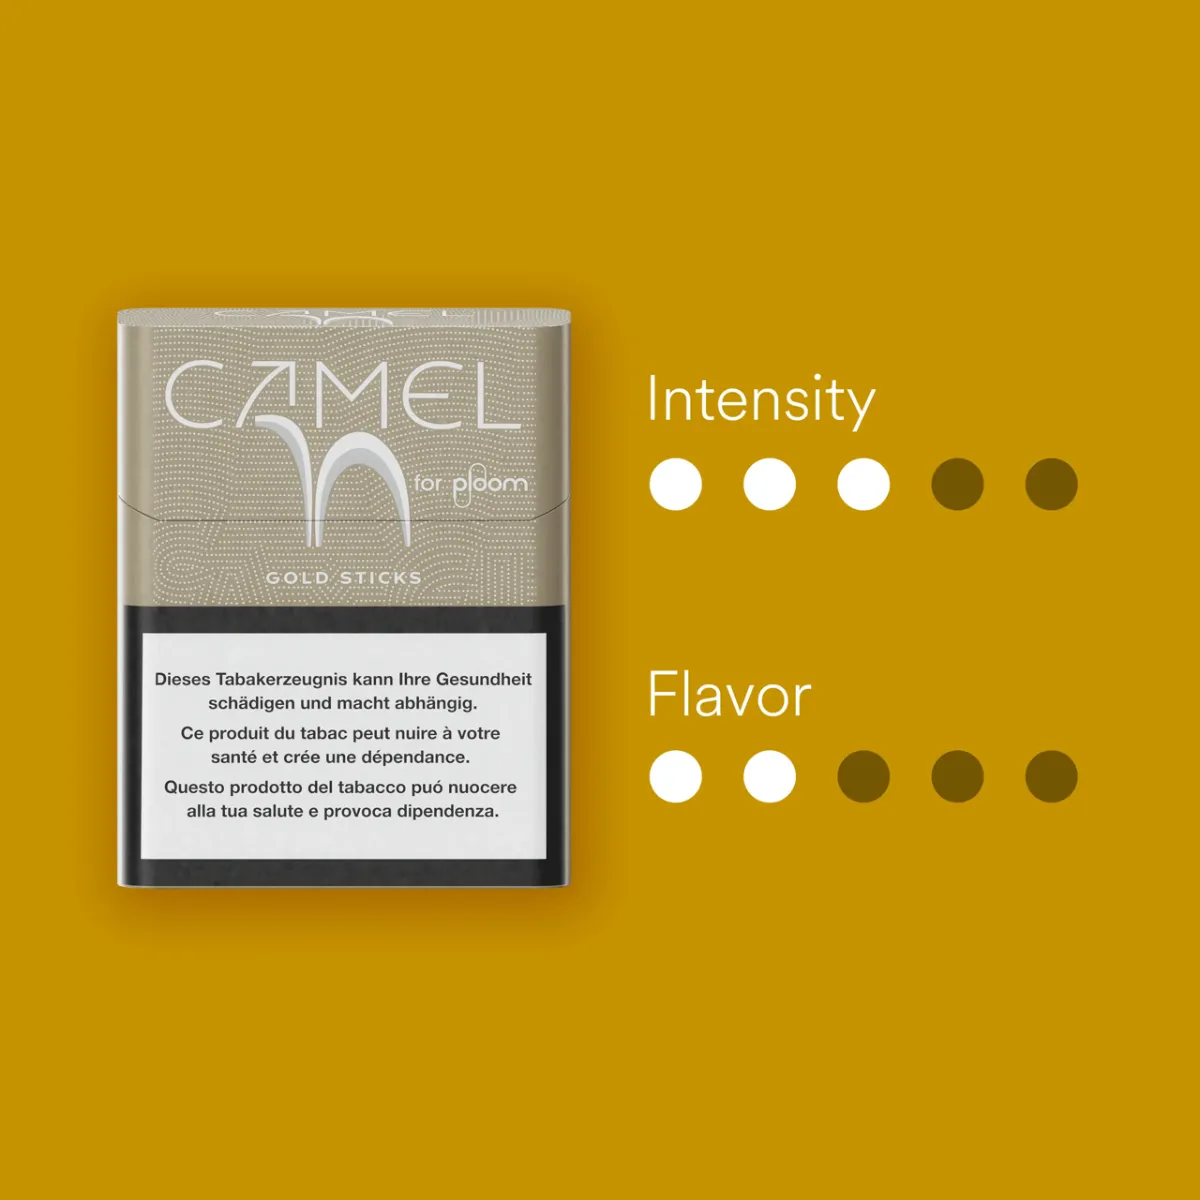 Camel Gold sticks for Ploom attributes
